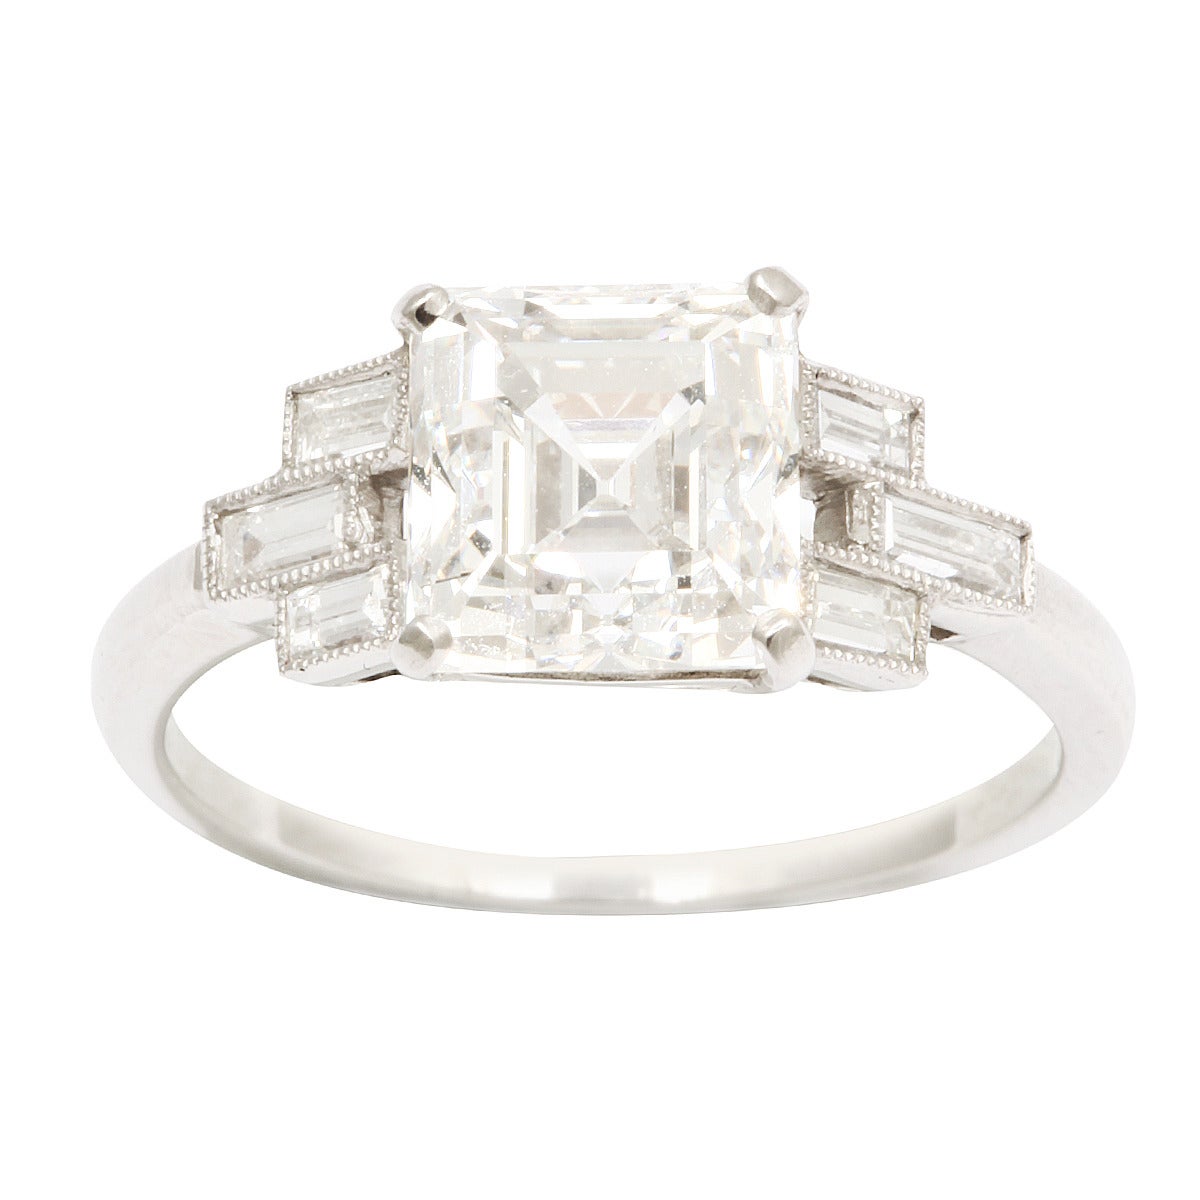 Asscher-cut diamond engagement ring set in platinum, with baguette and milgrain diamond shoulders.

American, ca. 1925
(2.40 cts G VS1 GIA Cert.)